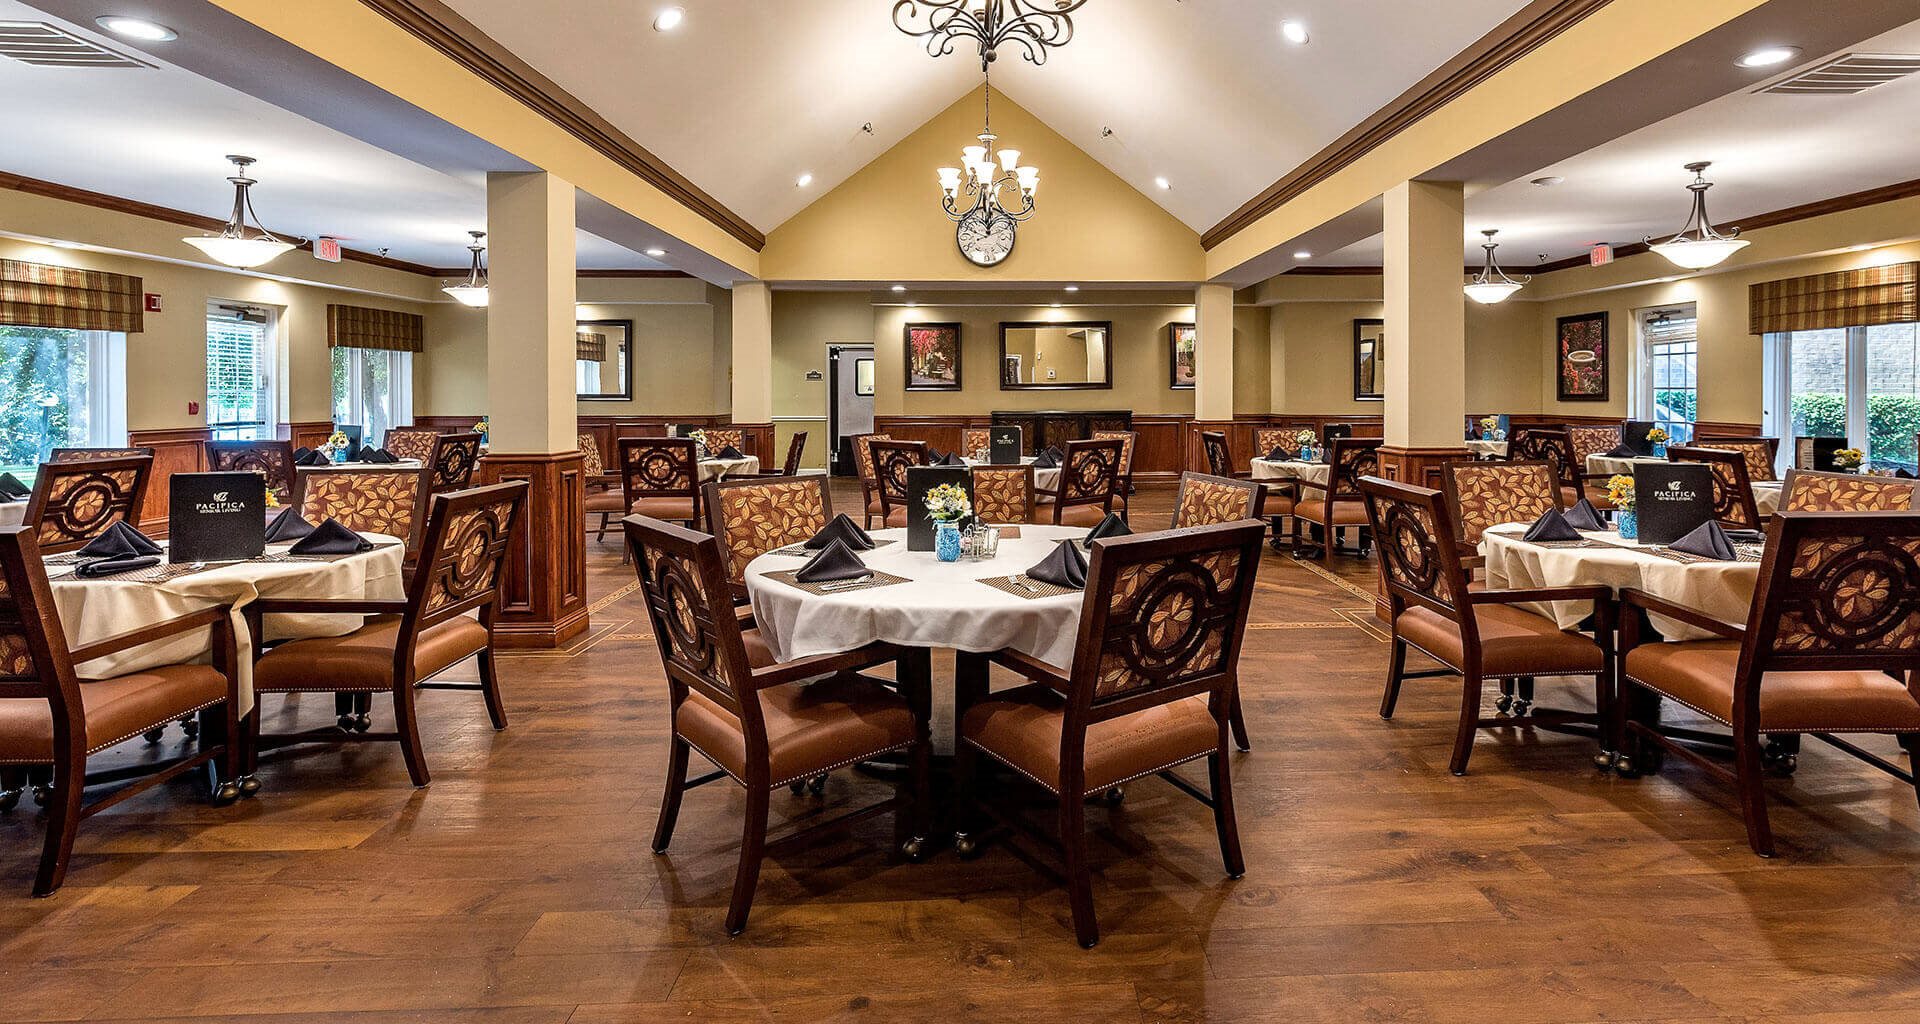 Restaurant Style Dining Room at Pacifica Senior Living Skylyn, Spartanburg